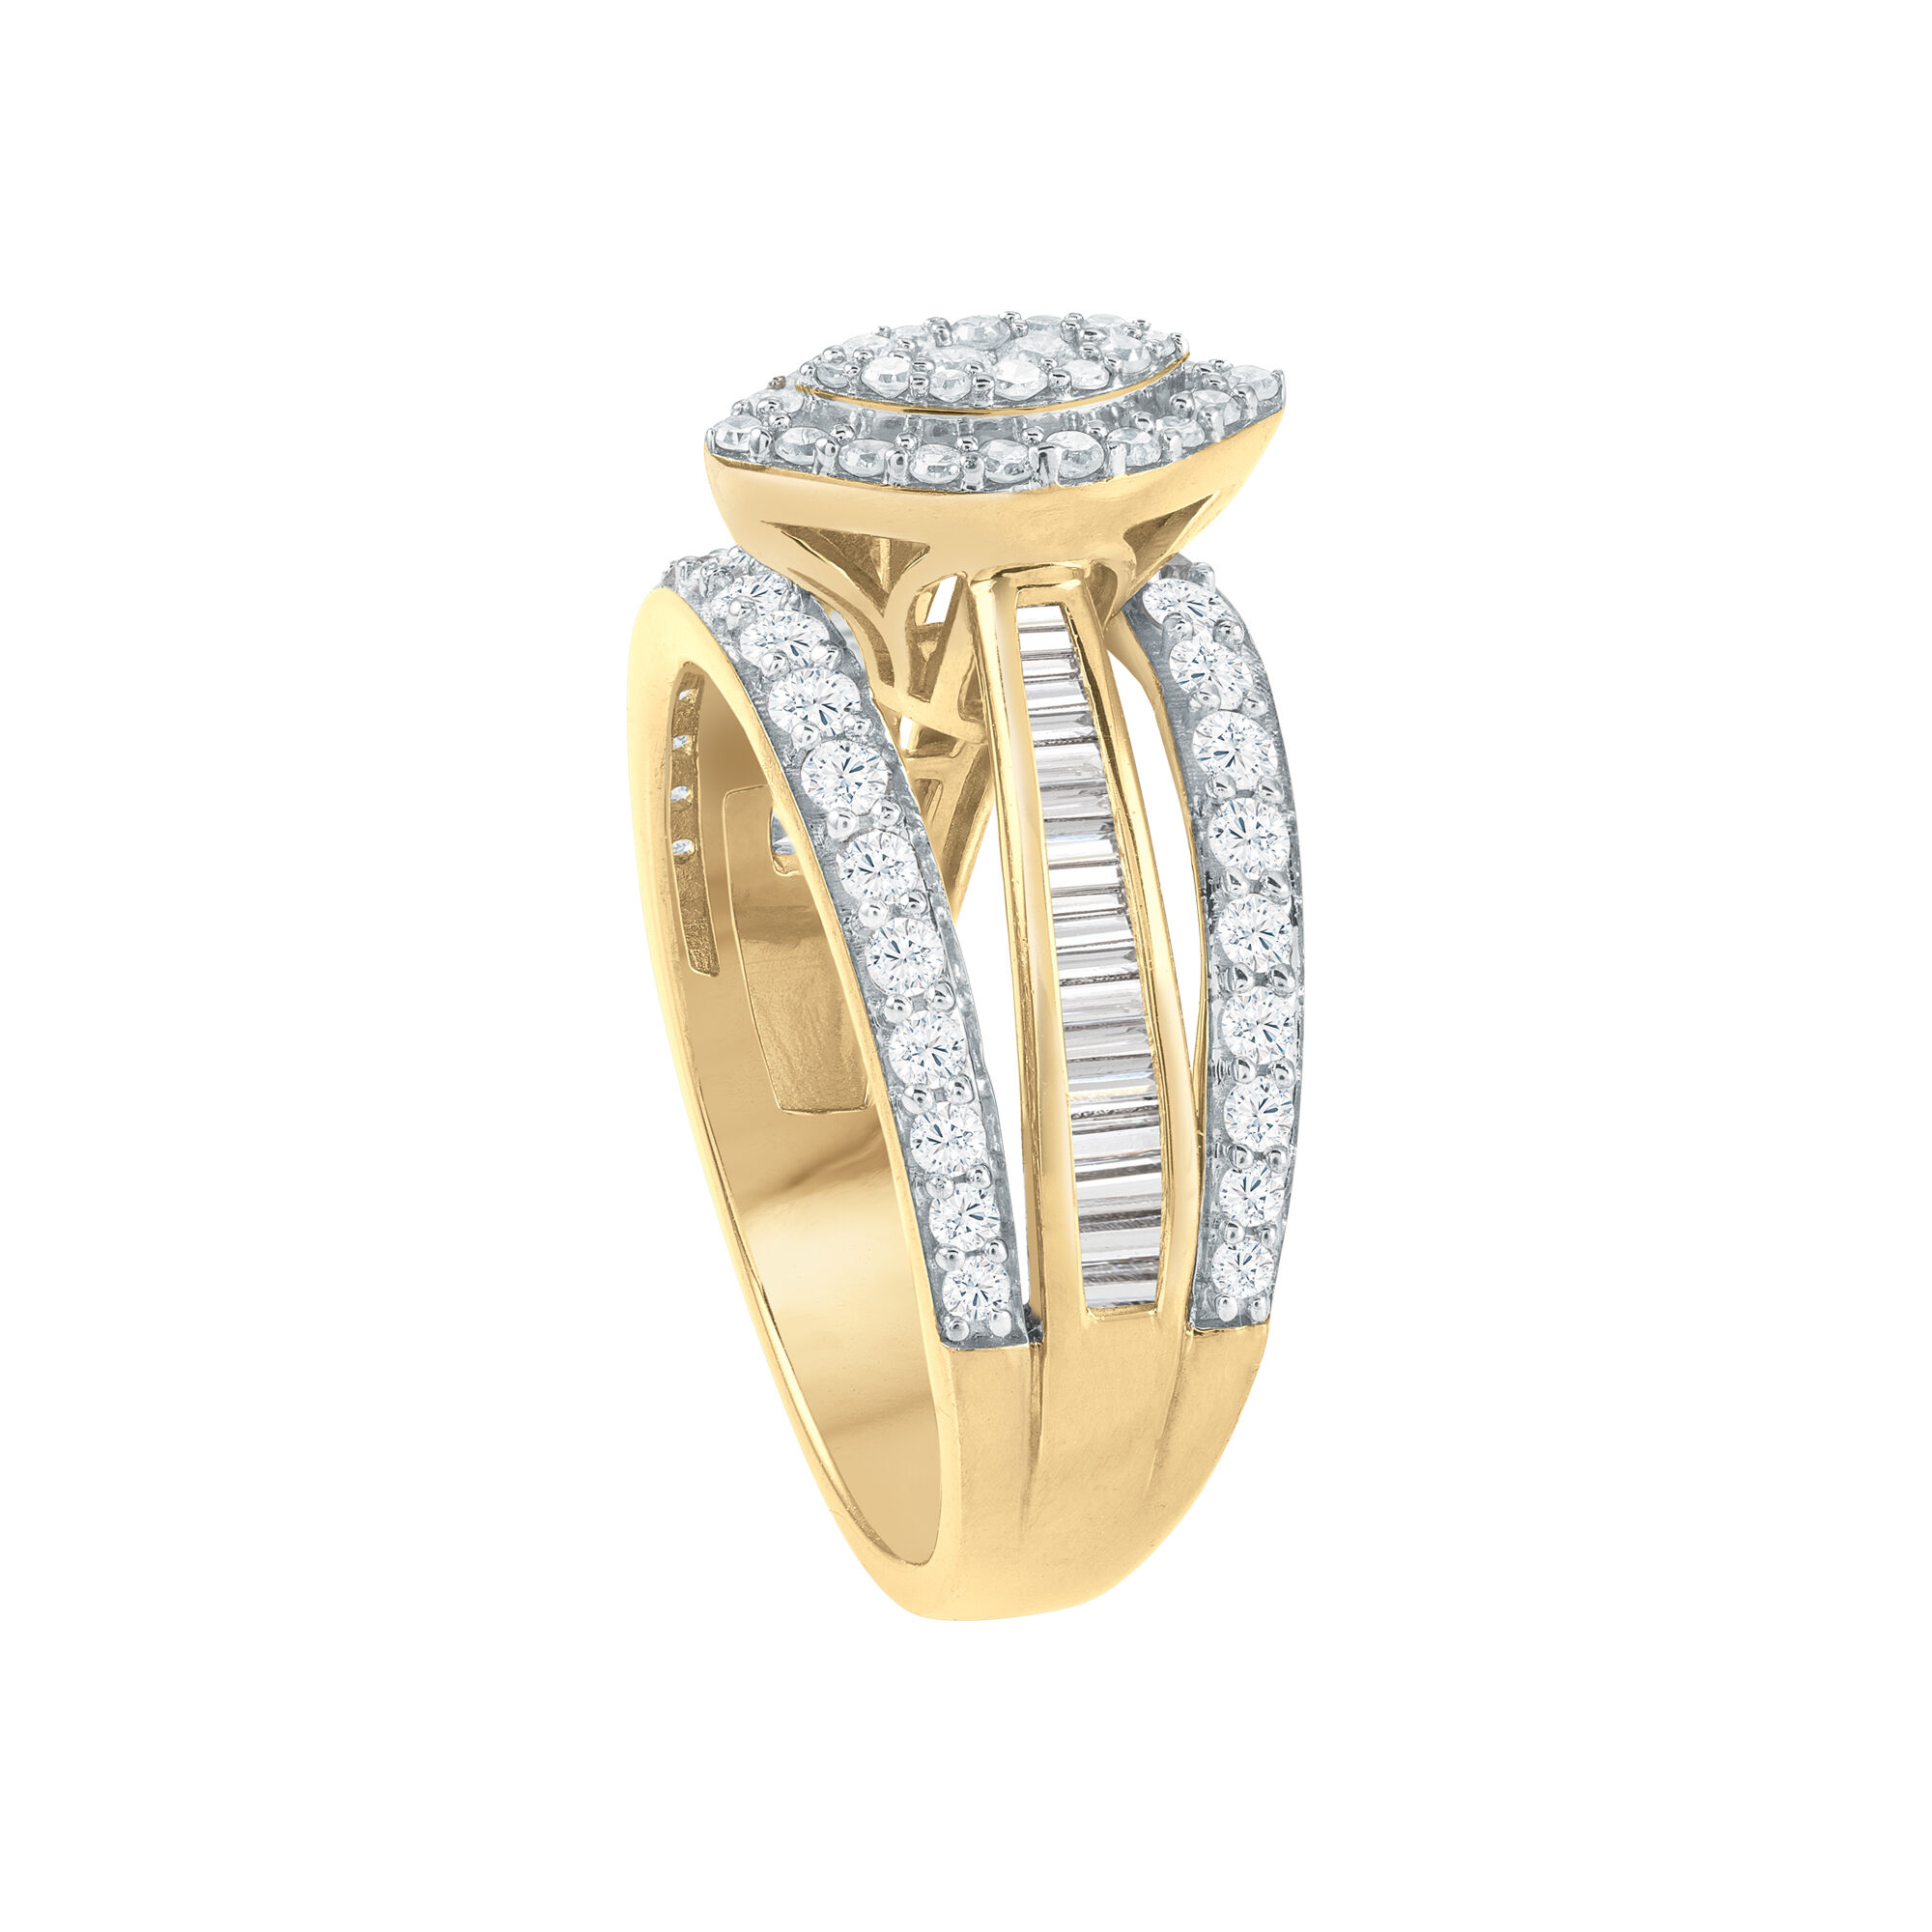 The One Hundred Diamond Ring 10924 0010 c side